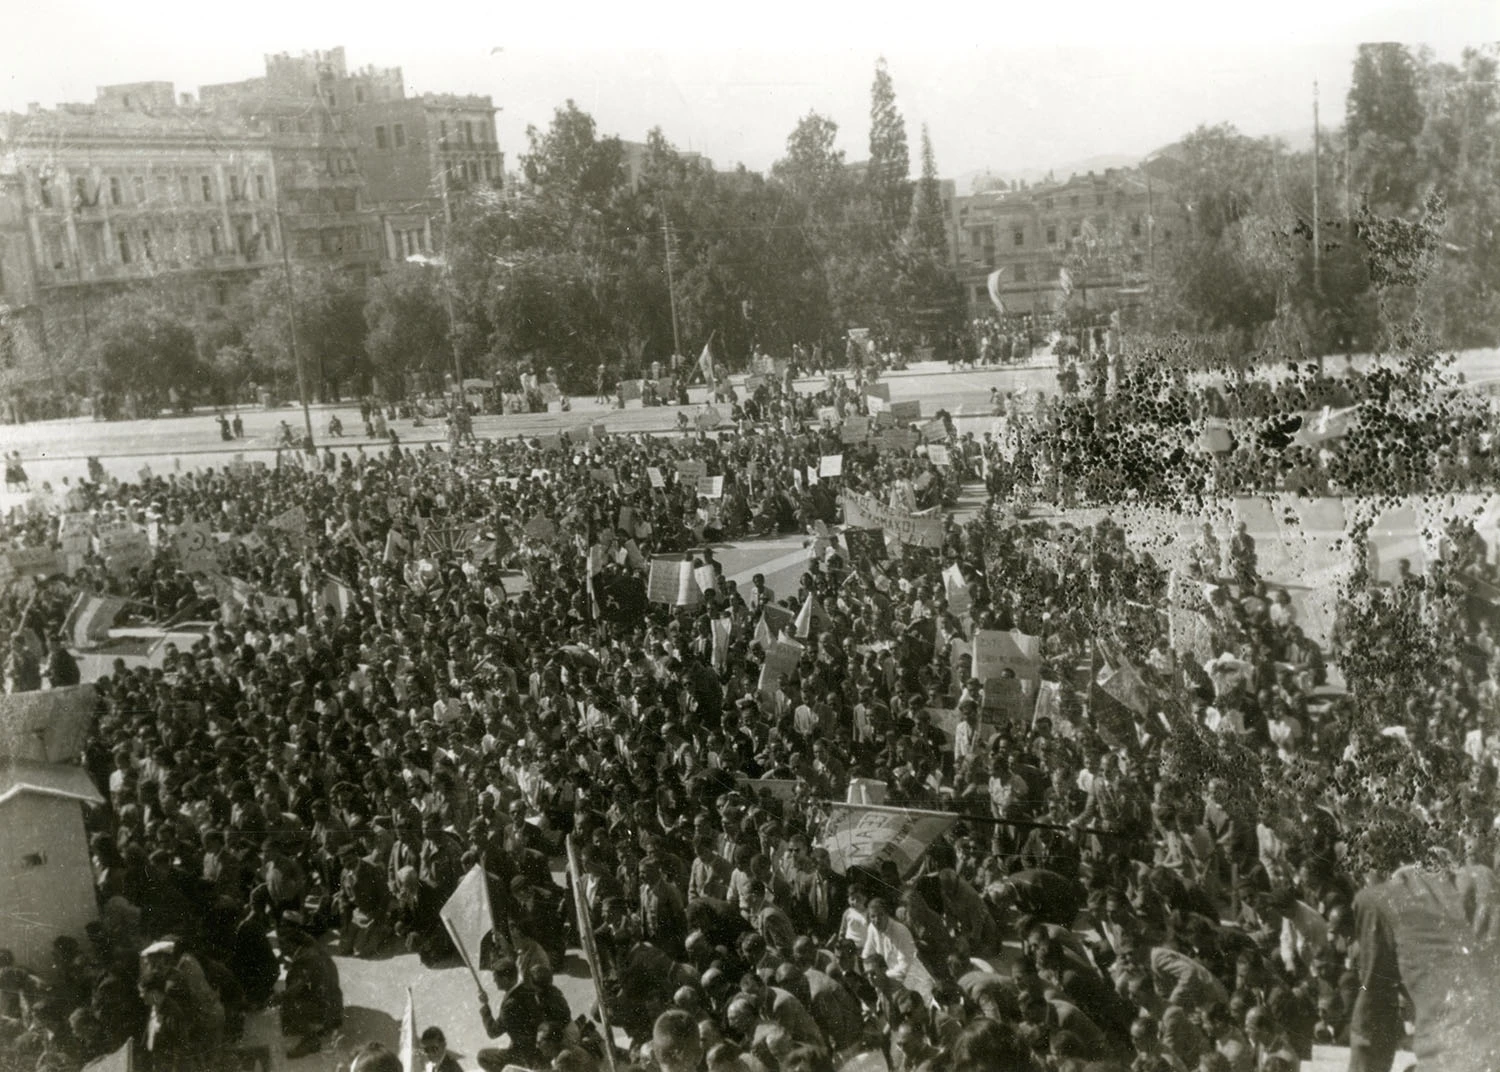 1974 &amp; 1944: Η Αθήνα γιορτάζει την ελευθερία της